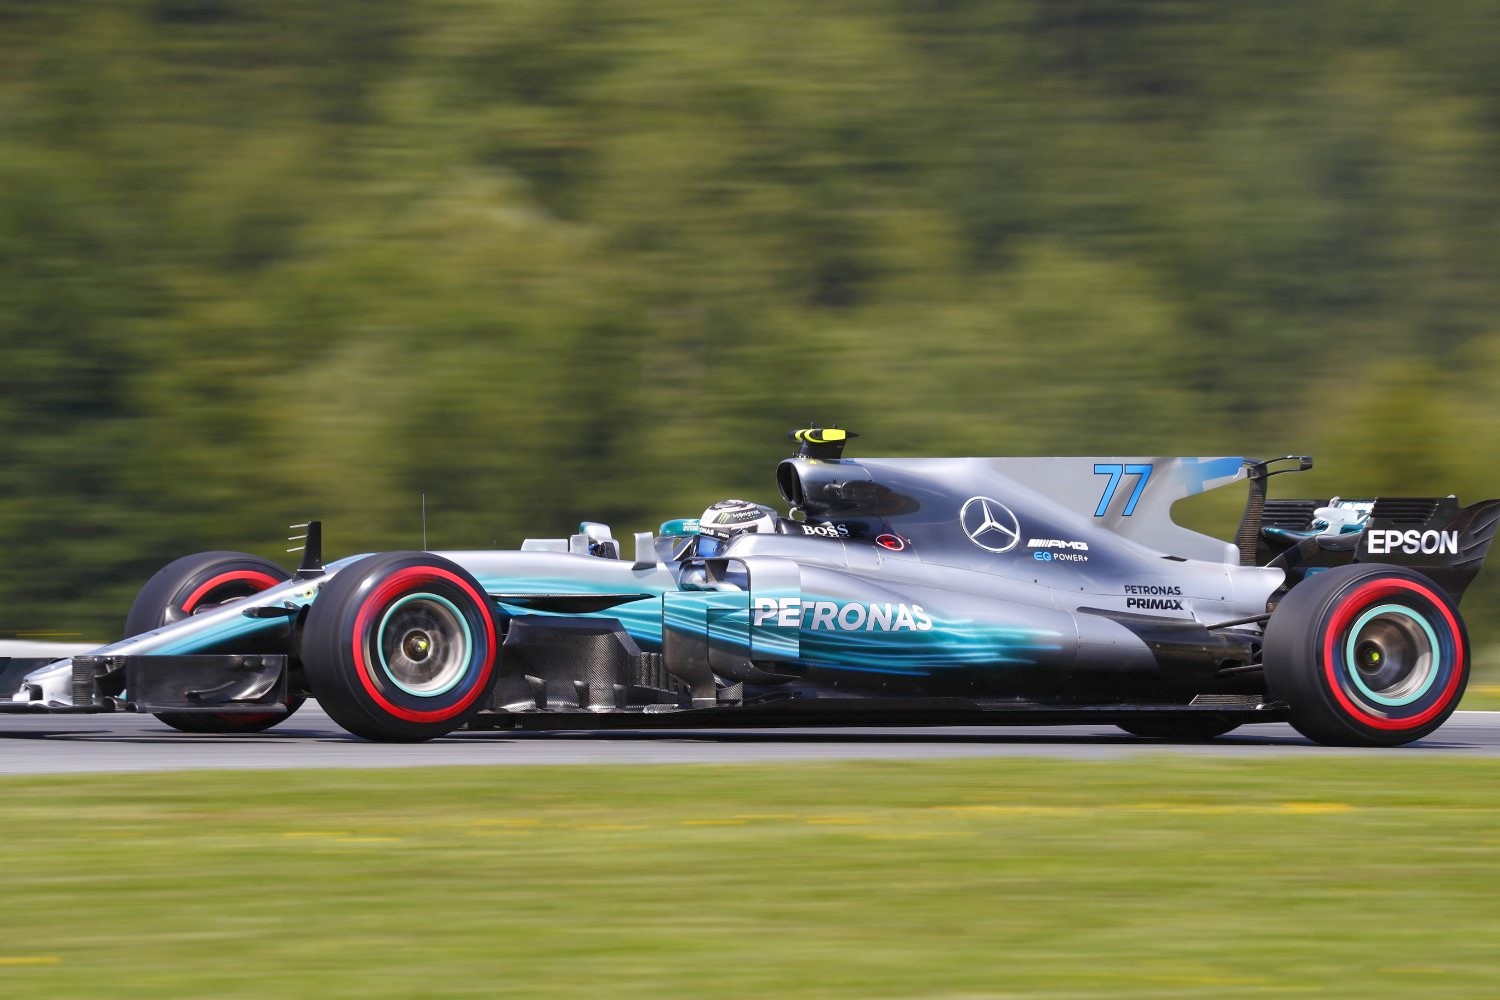 Valtteri Bottas on pole for Mercedes